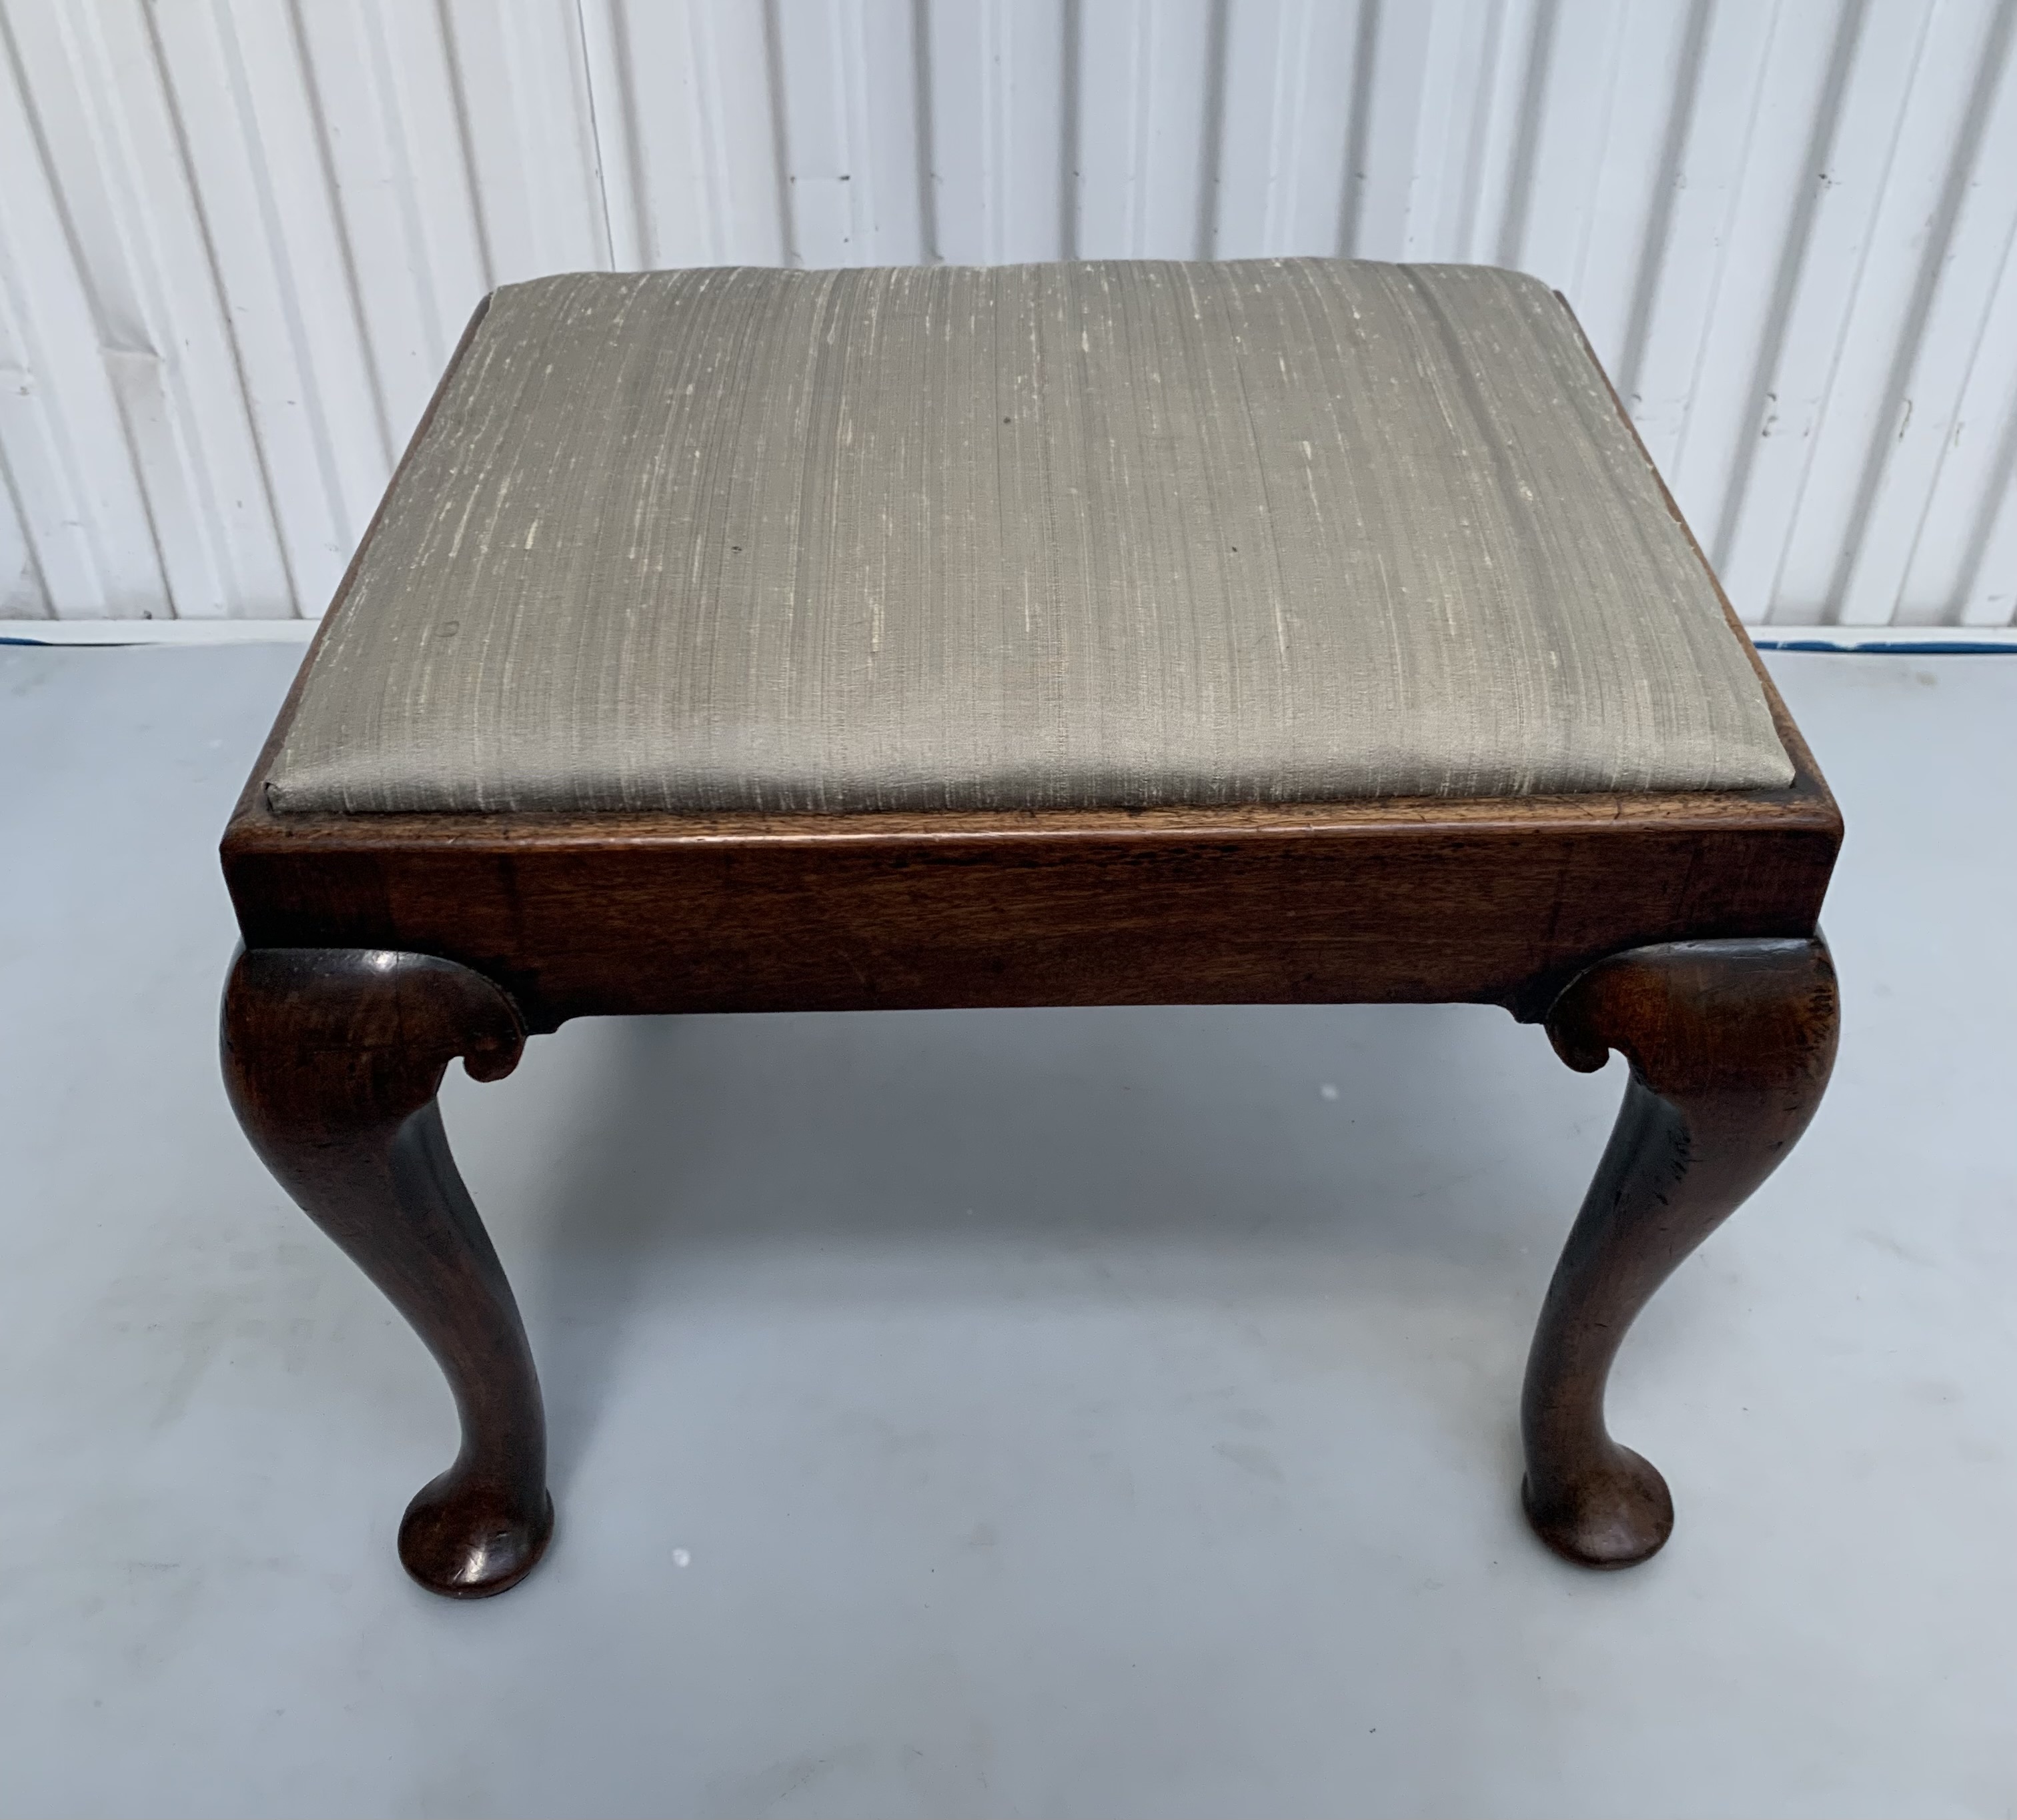 George IV dressing table stool - Image 5 of 6